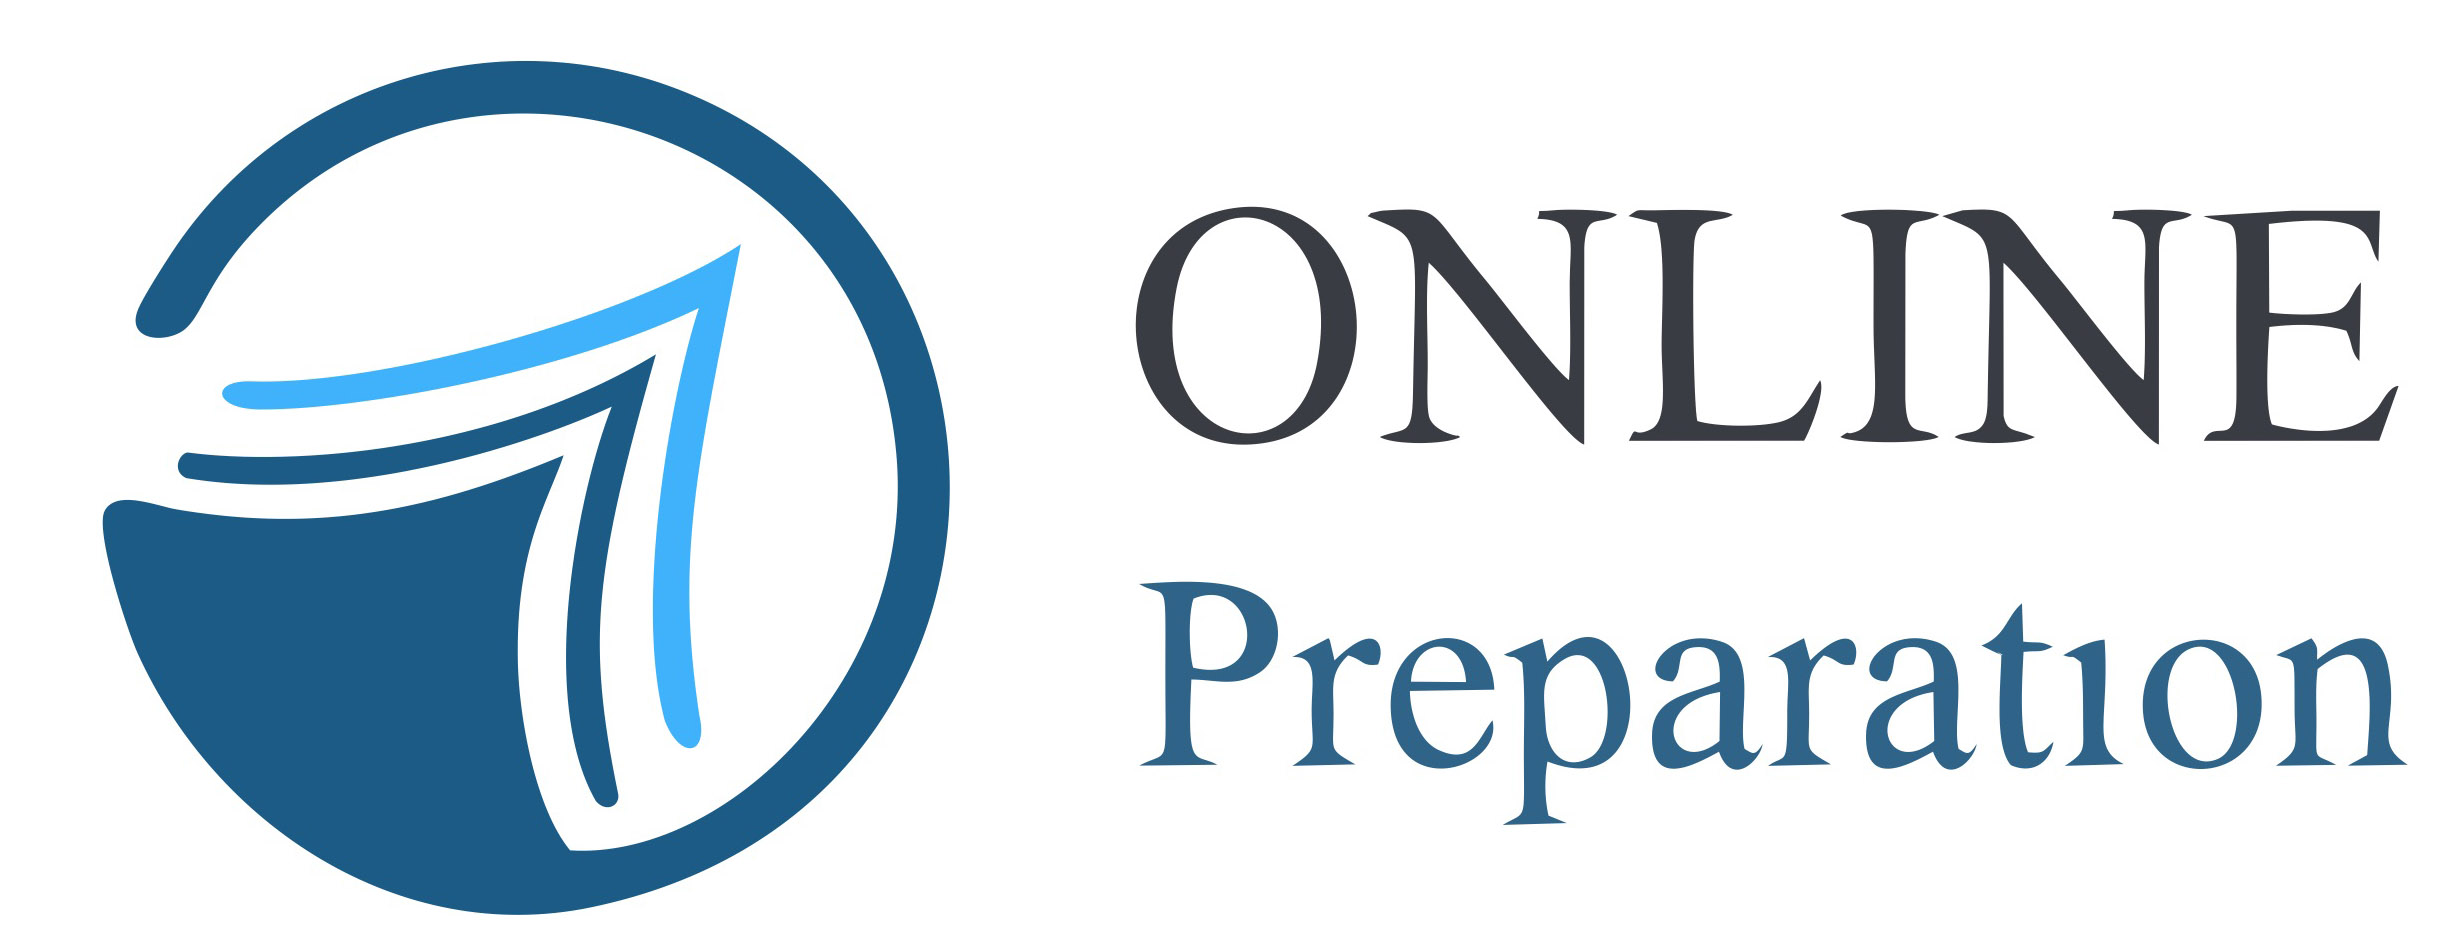 Online Preparation logo